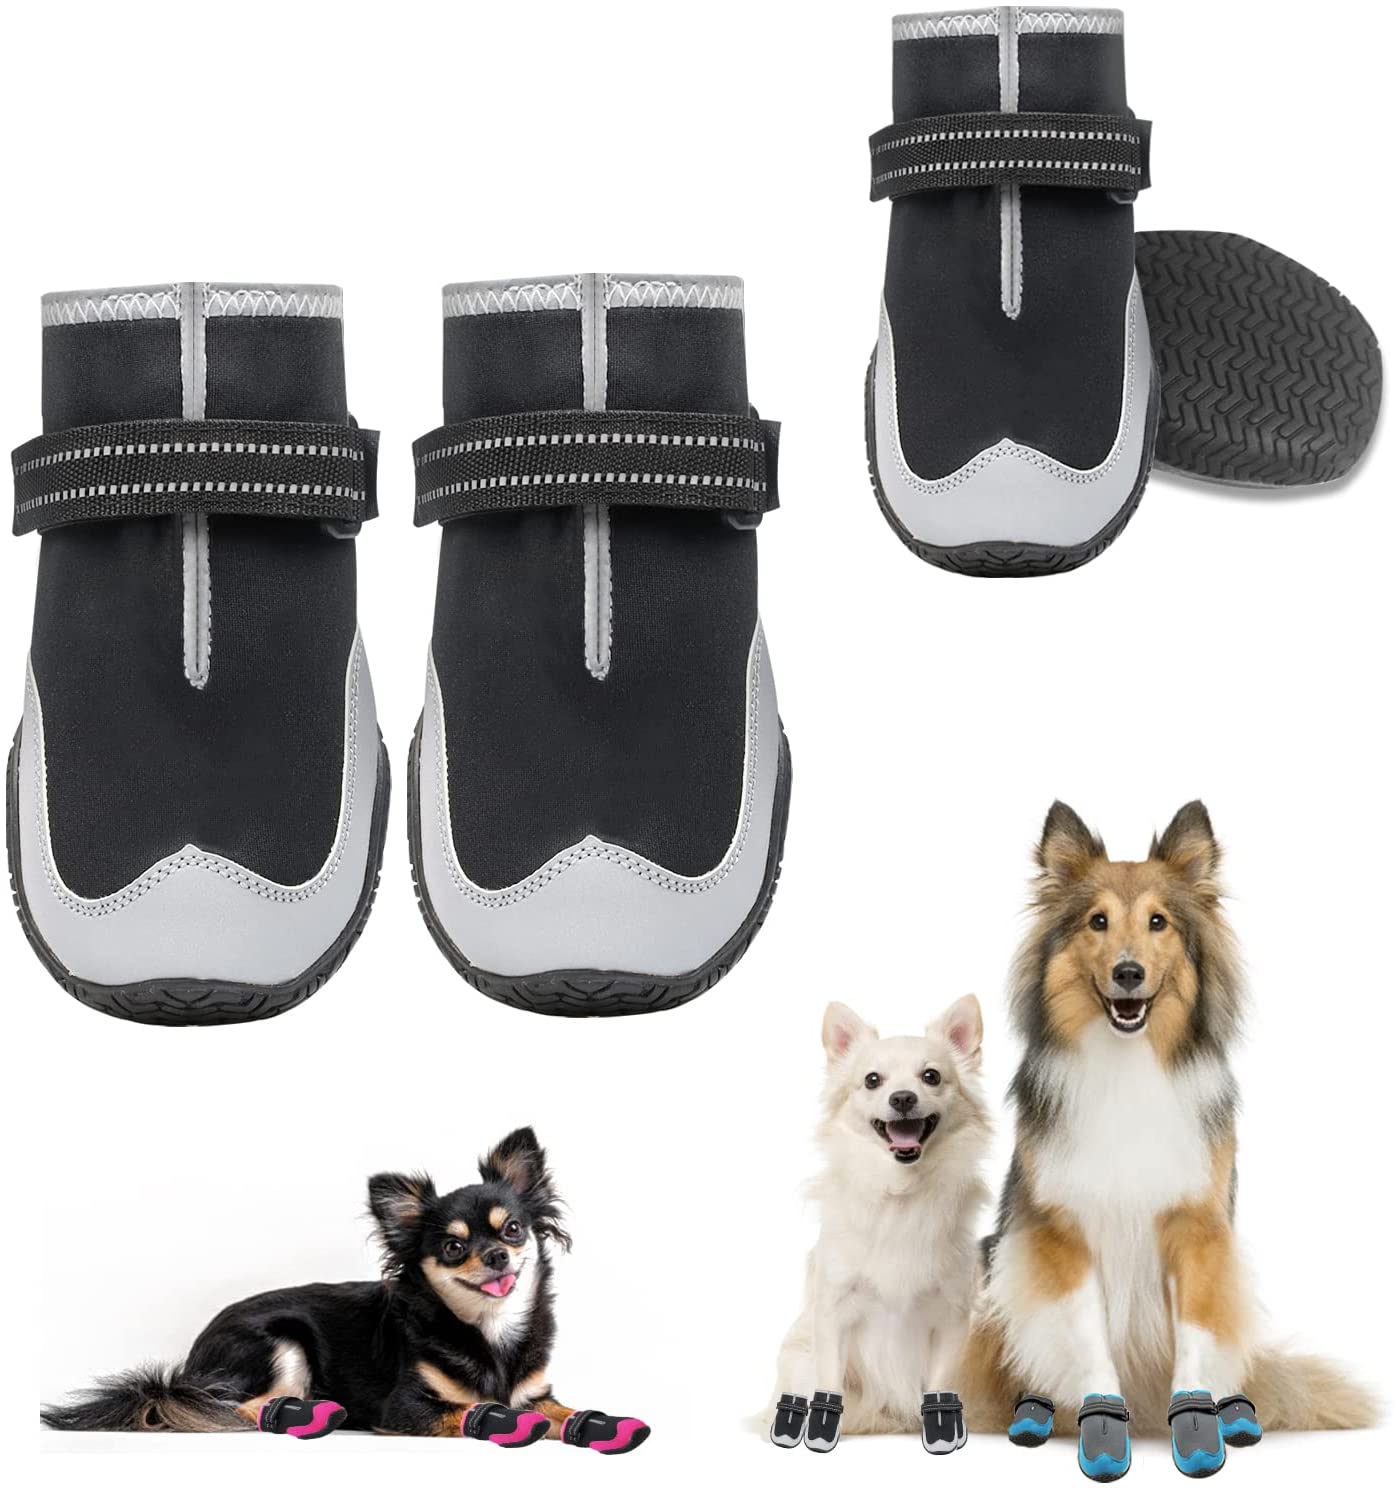 KUTKUT Waterproof Dog Boots for Hot Pavement Dogs Shoes Heat Protection Paw Breathable Non-Slip Rain Shoes Adjustable Reflective Straps for Small Medium Large Dogs 4PCS Black-dog shoes-kutkutstyle